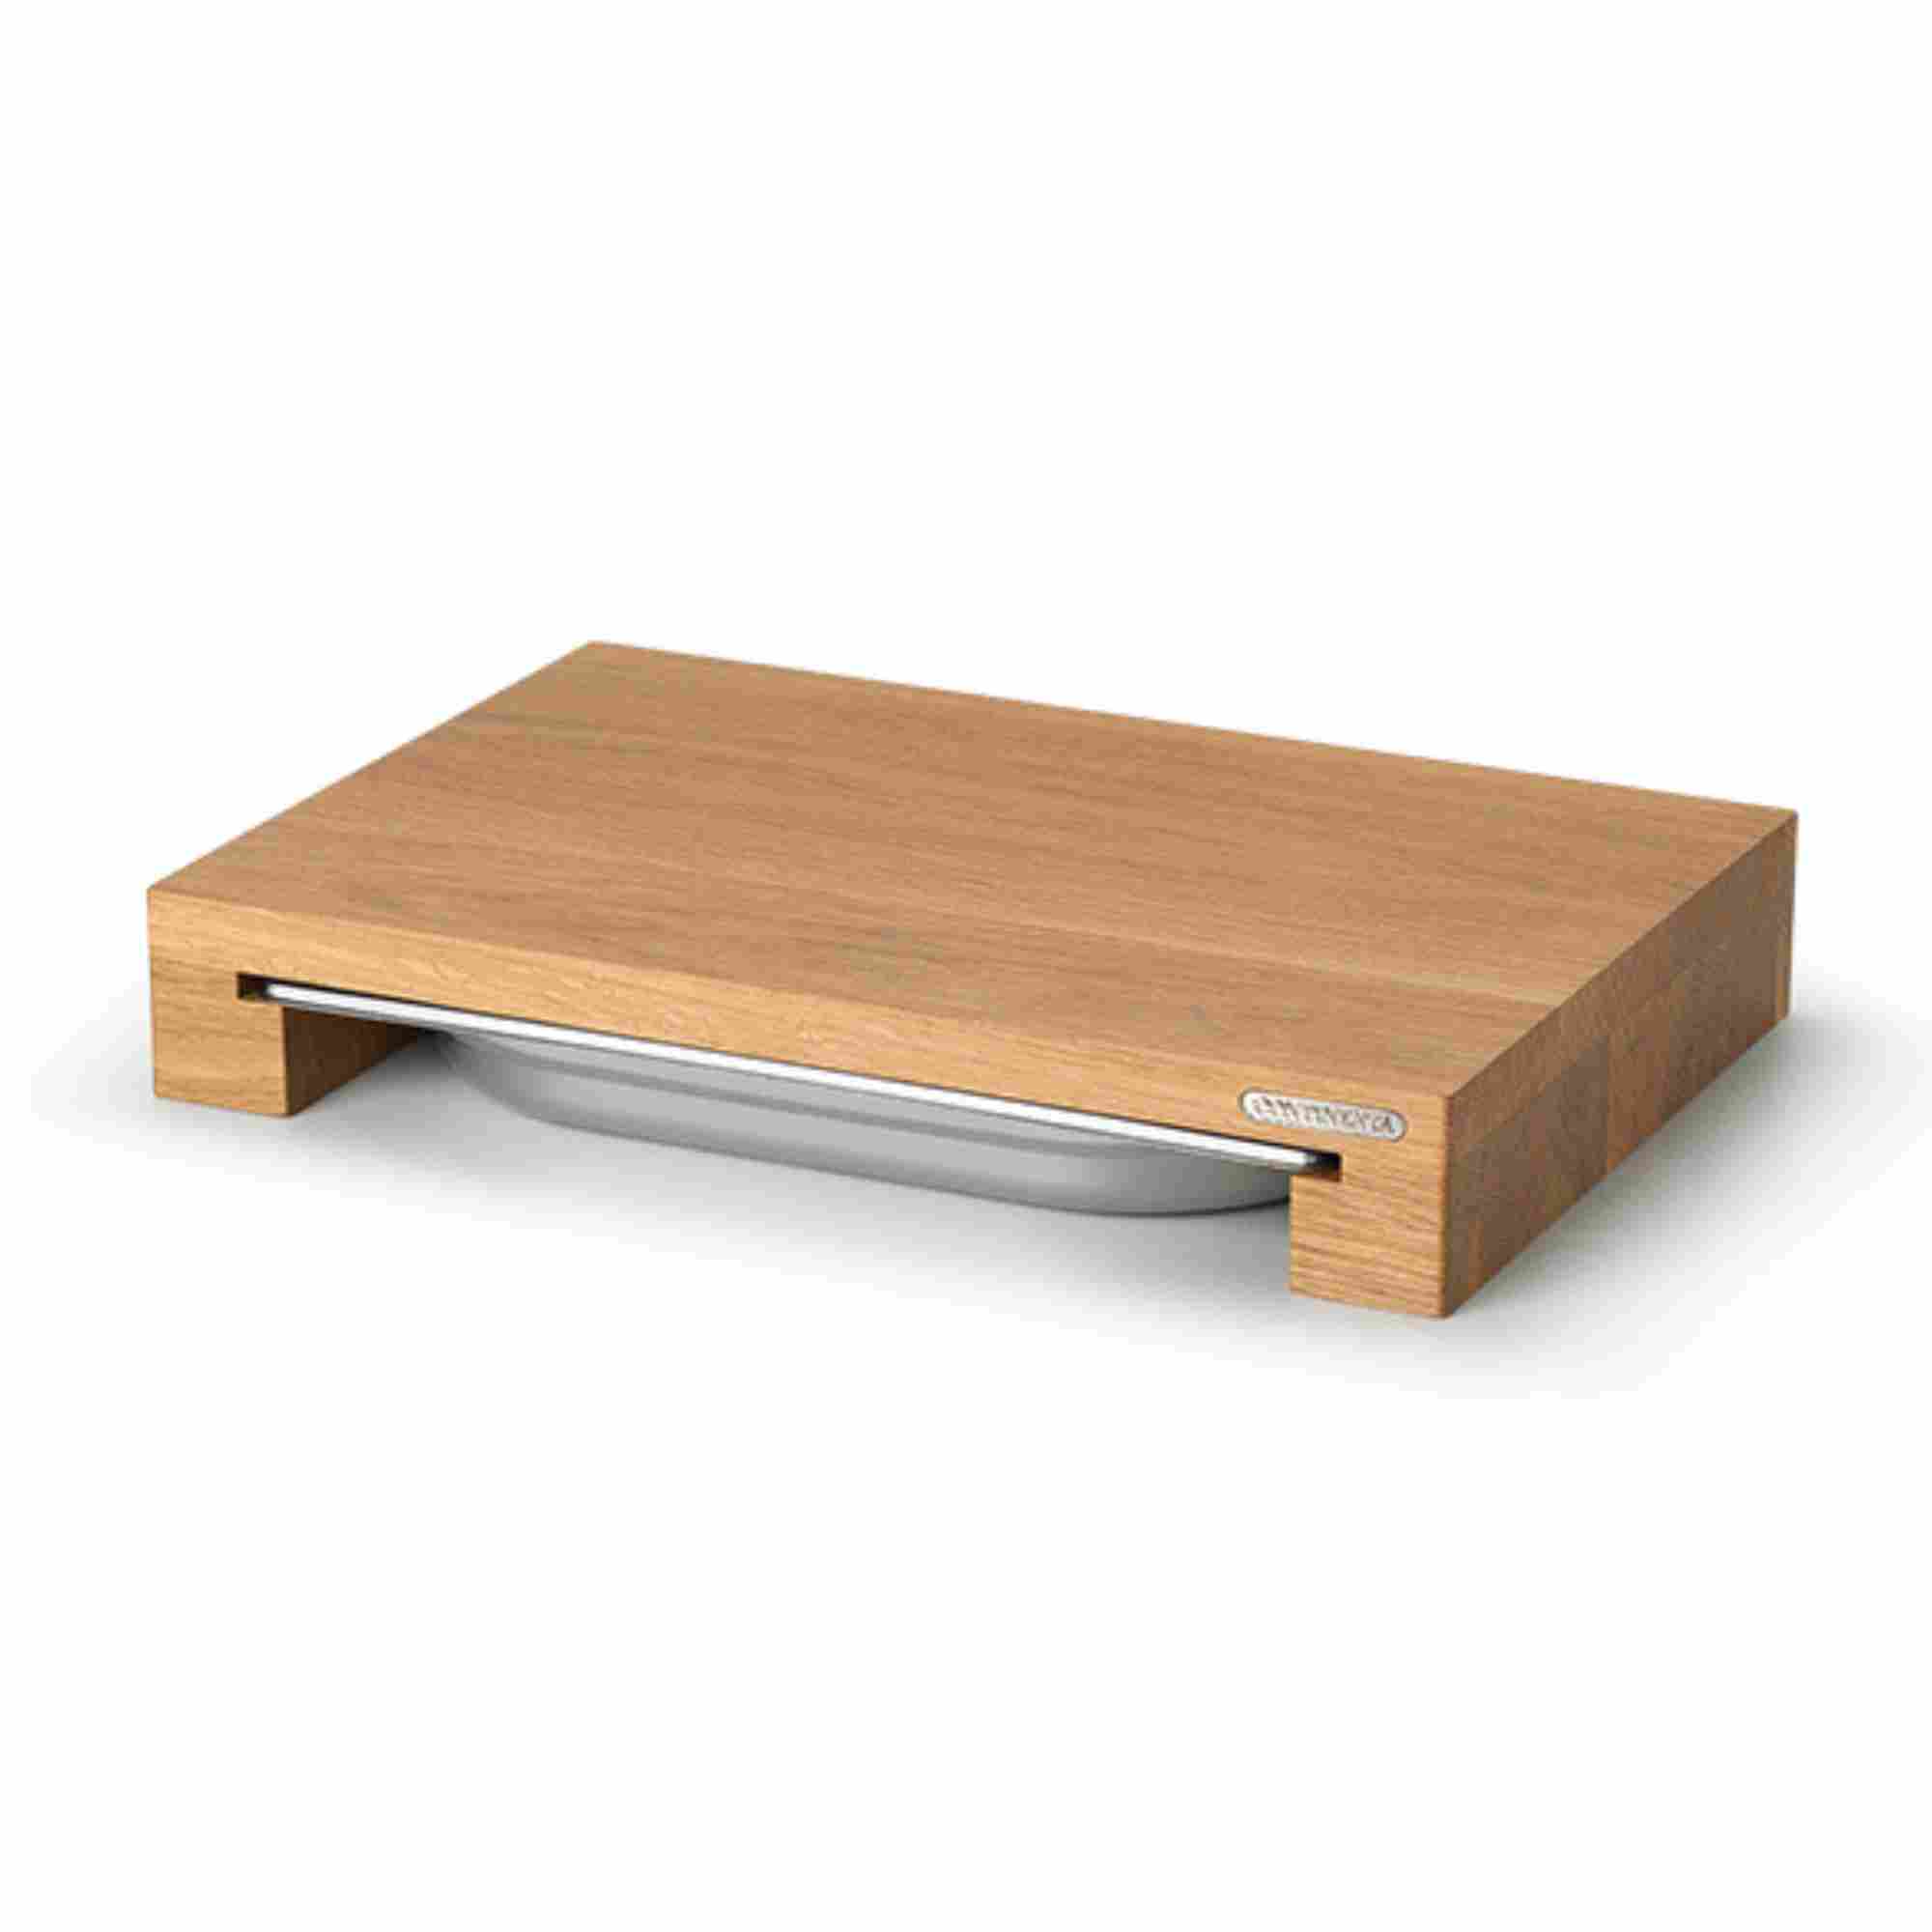 Couchtisch, Möbel, Tabelle, Sperrholz, Holz